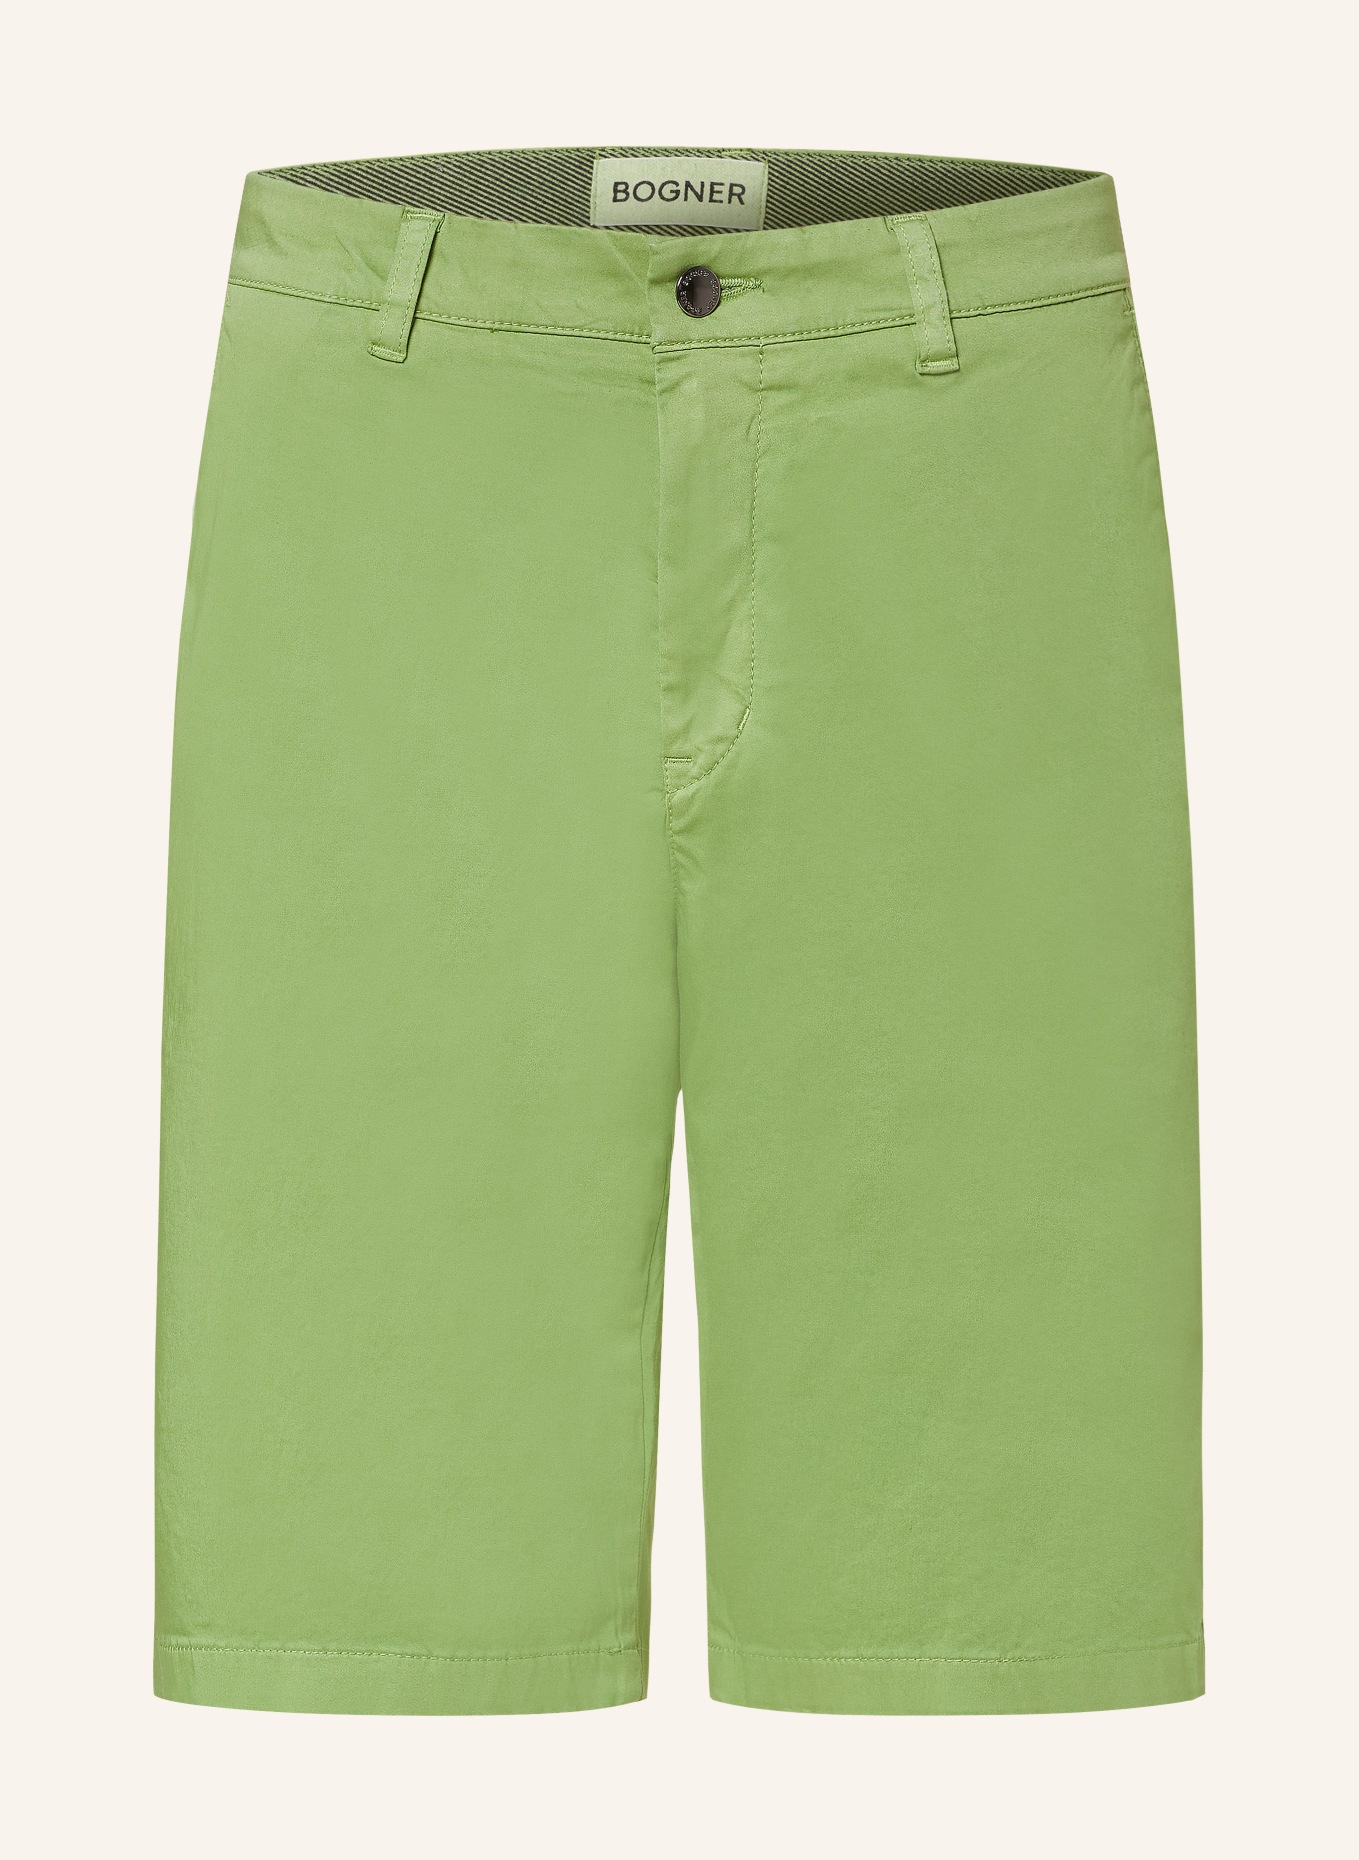 BOGNER Shorts MIAMI-G6, Farbe: GRÜN (Bild 1)